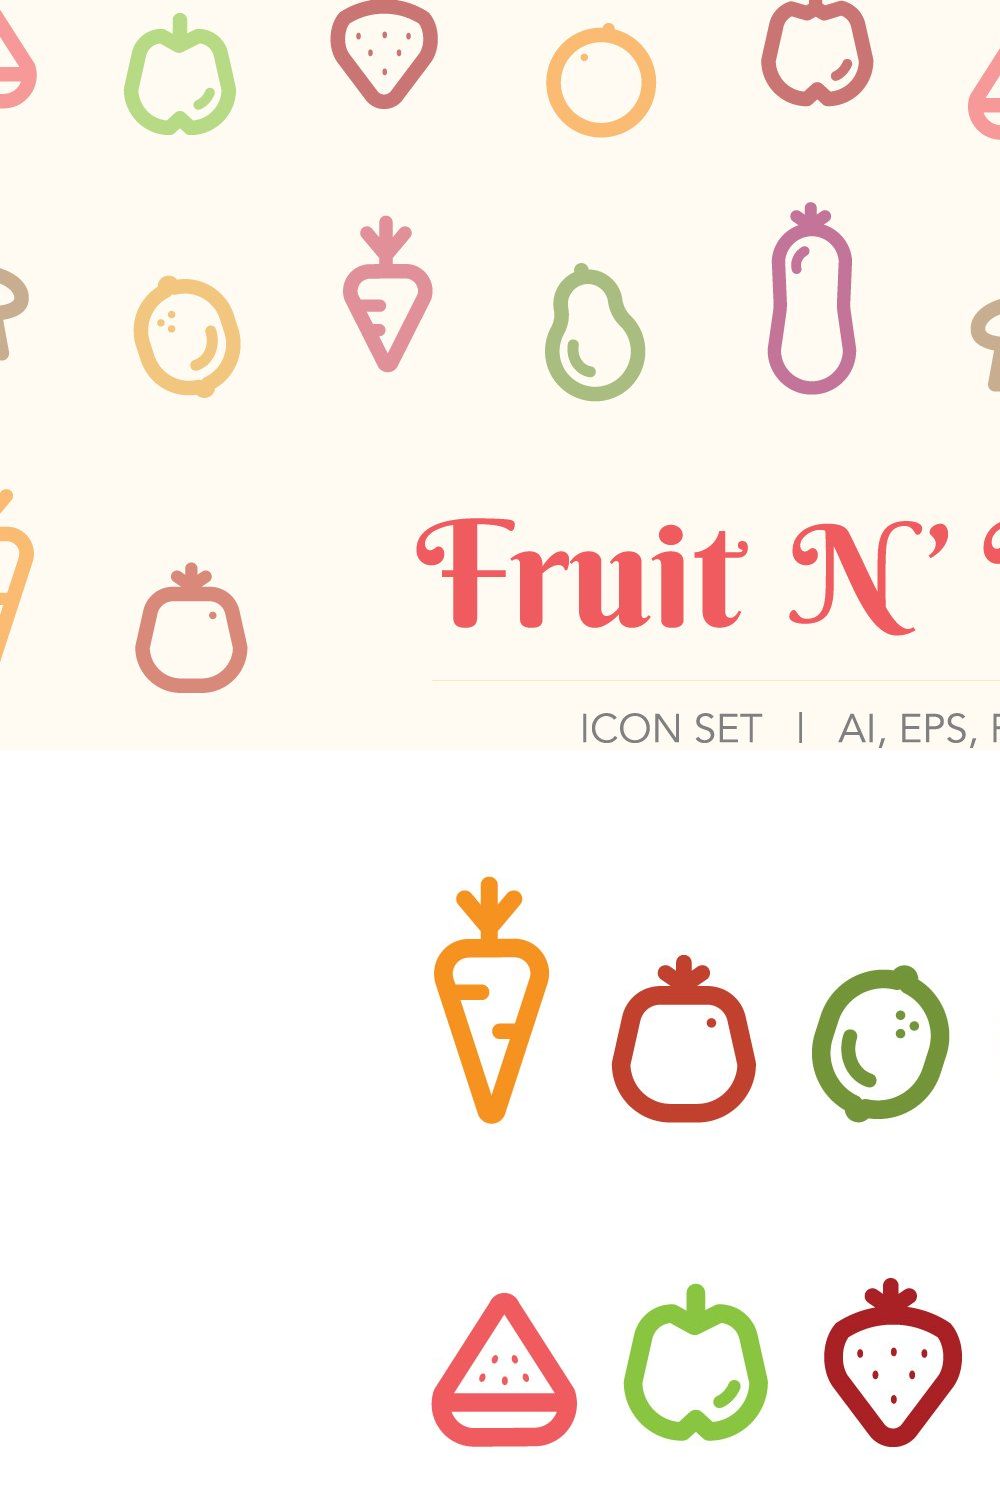 Fruit N' Veggie Icon Set pinterest preview image.